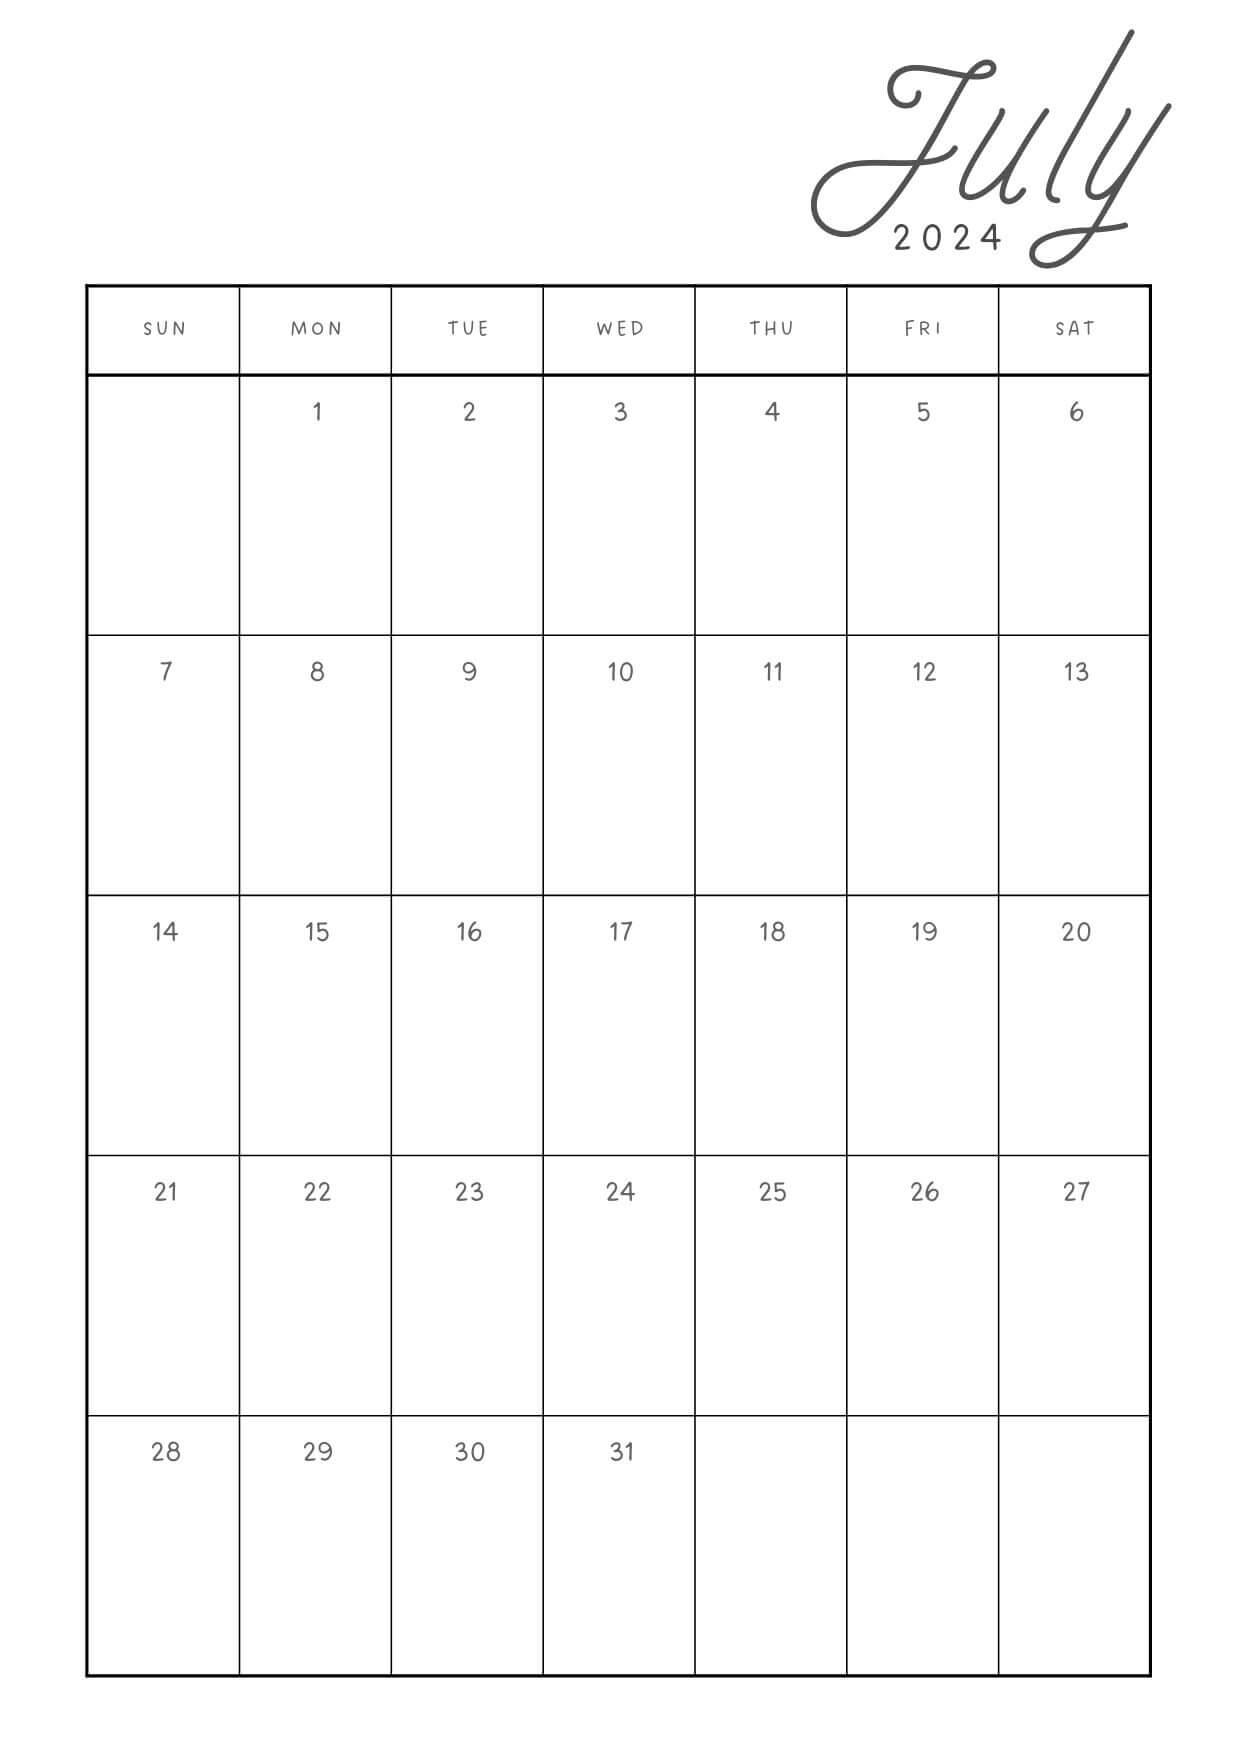 July 2024 Calendars Pack